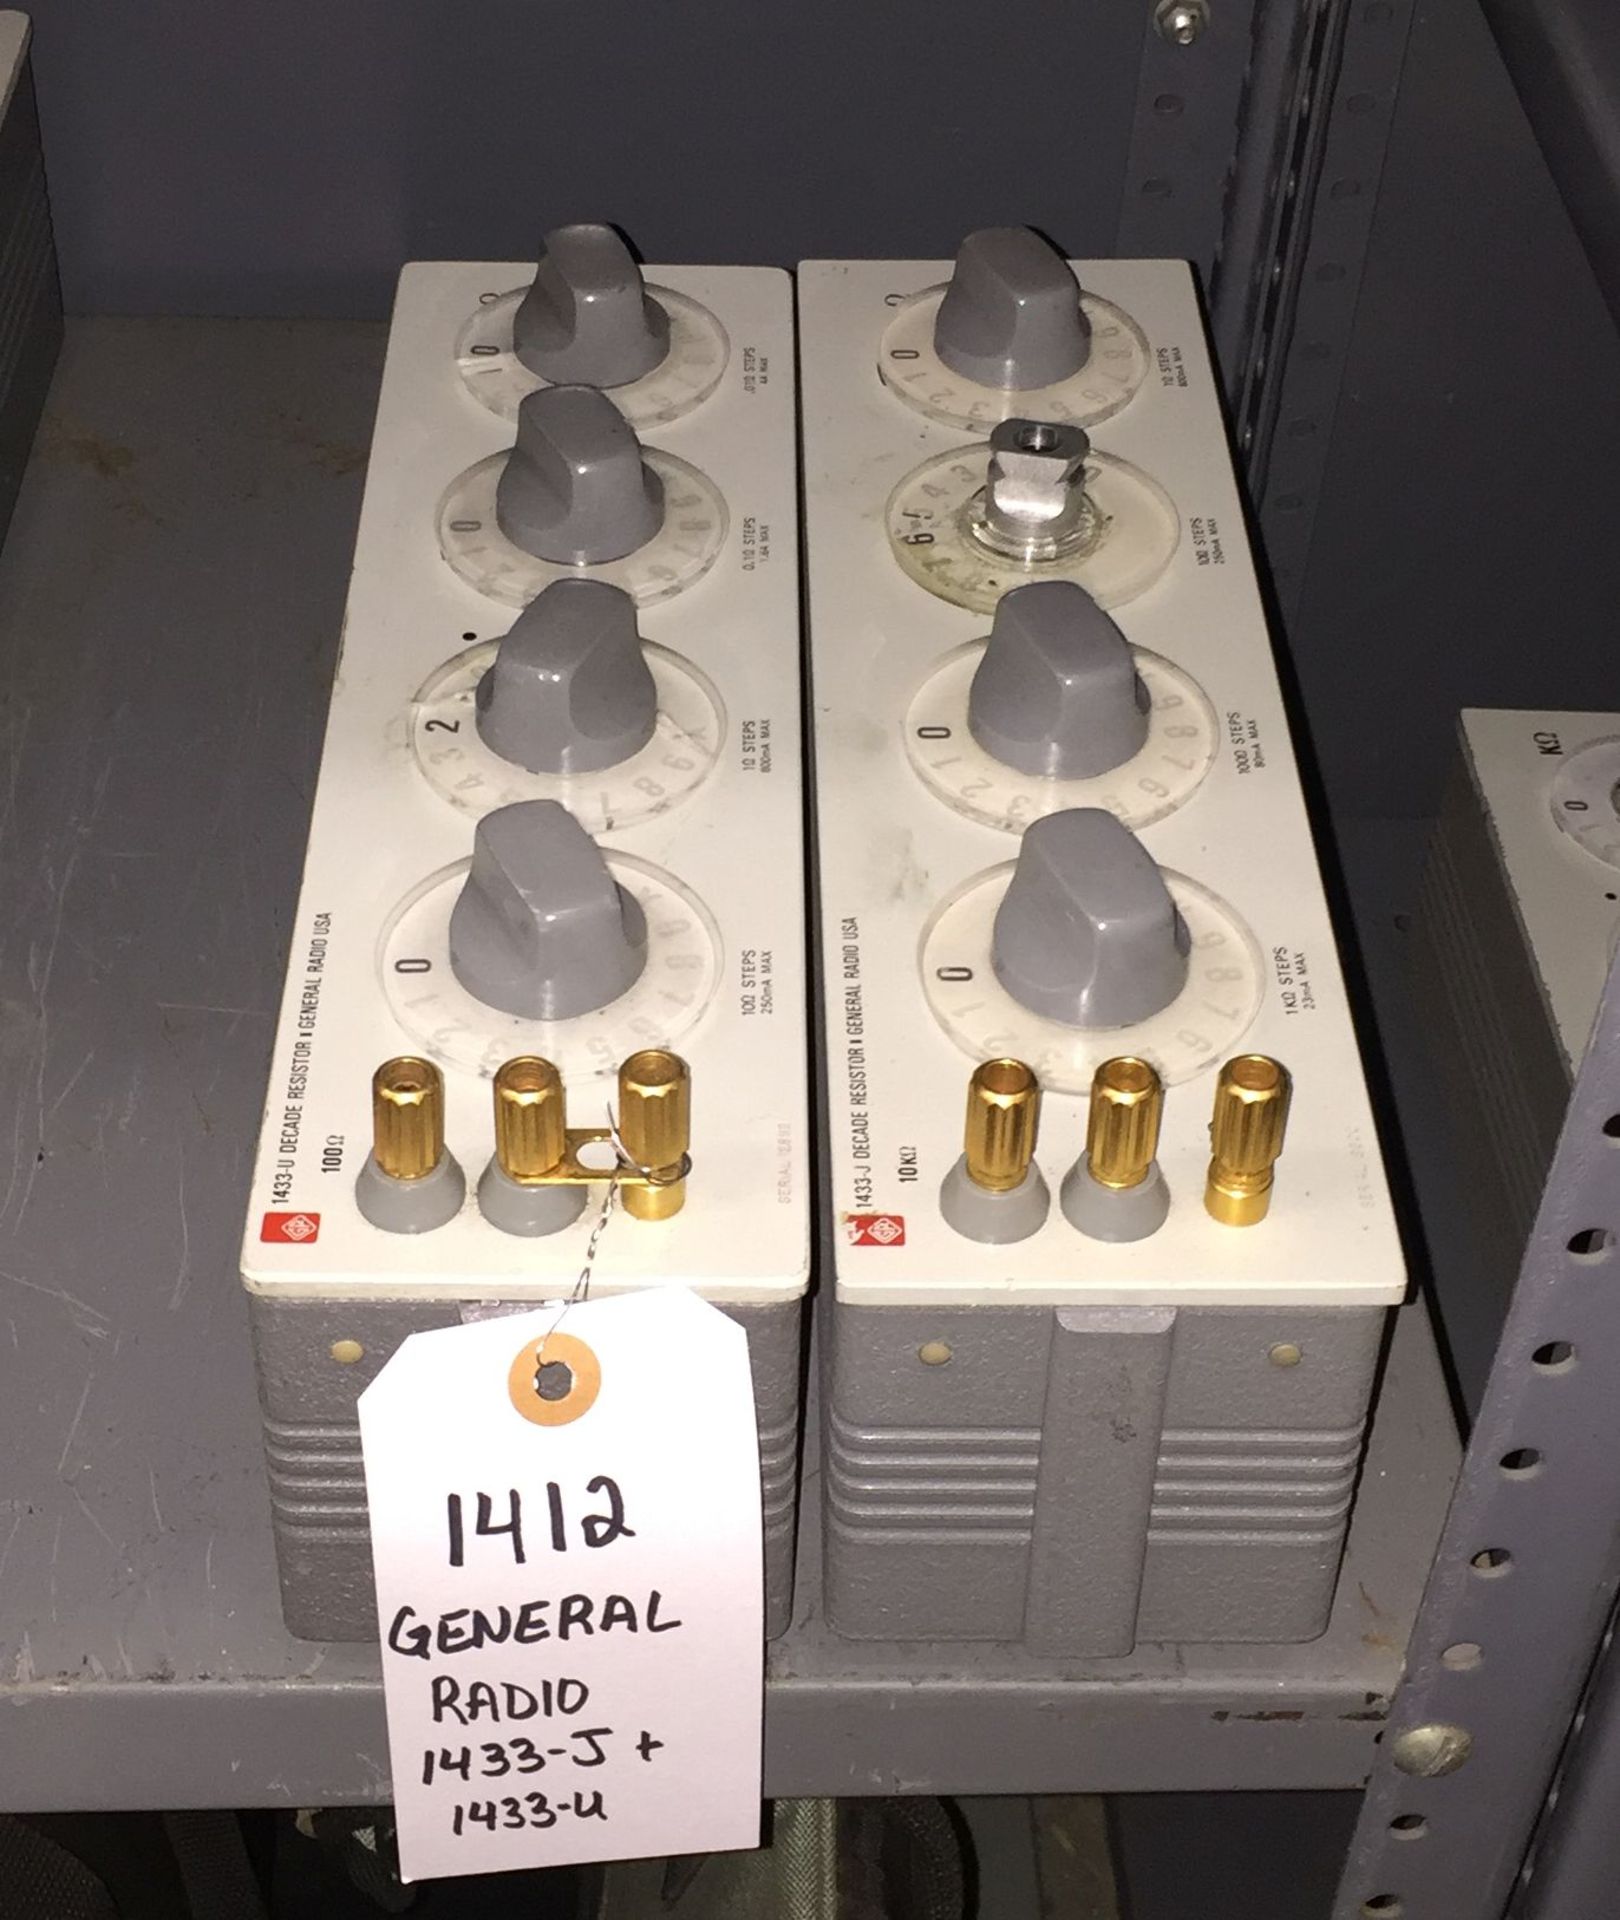 Lot of General Radio 1433-J + 1433-U Decade Resistors